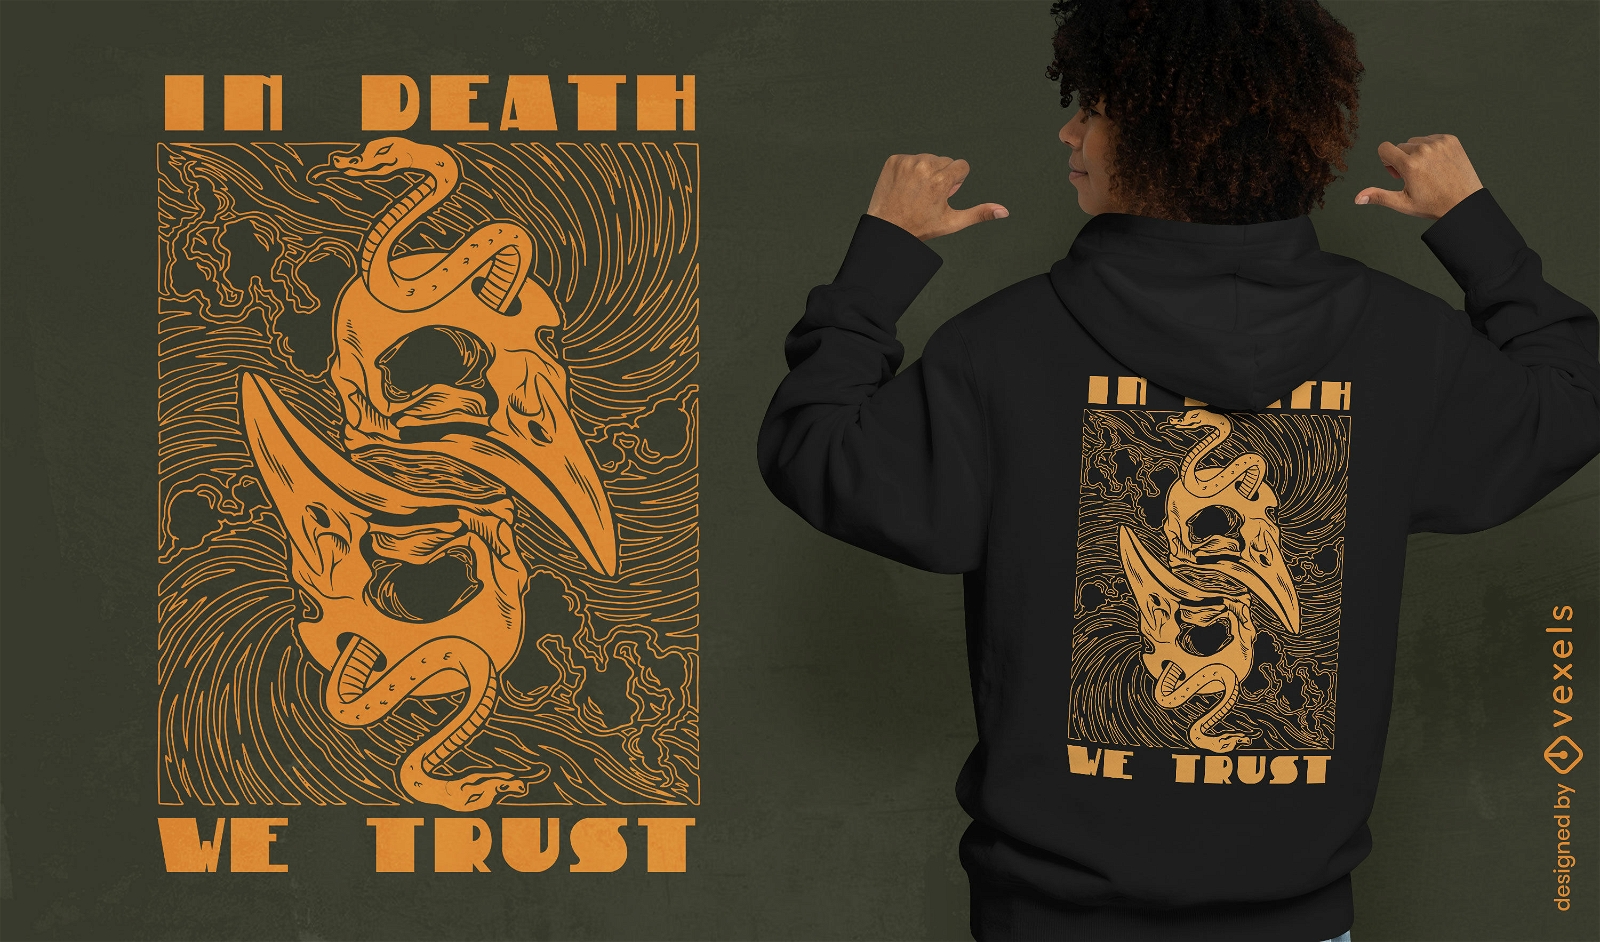 In death we trust t-shirt design